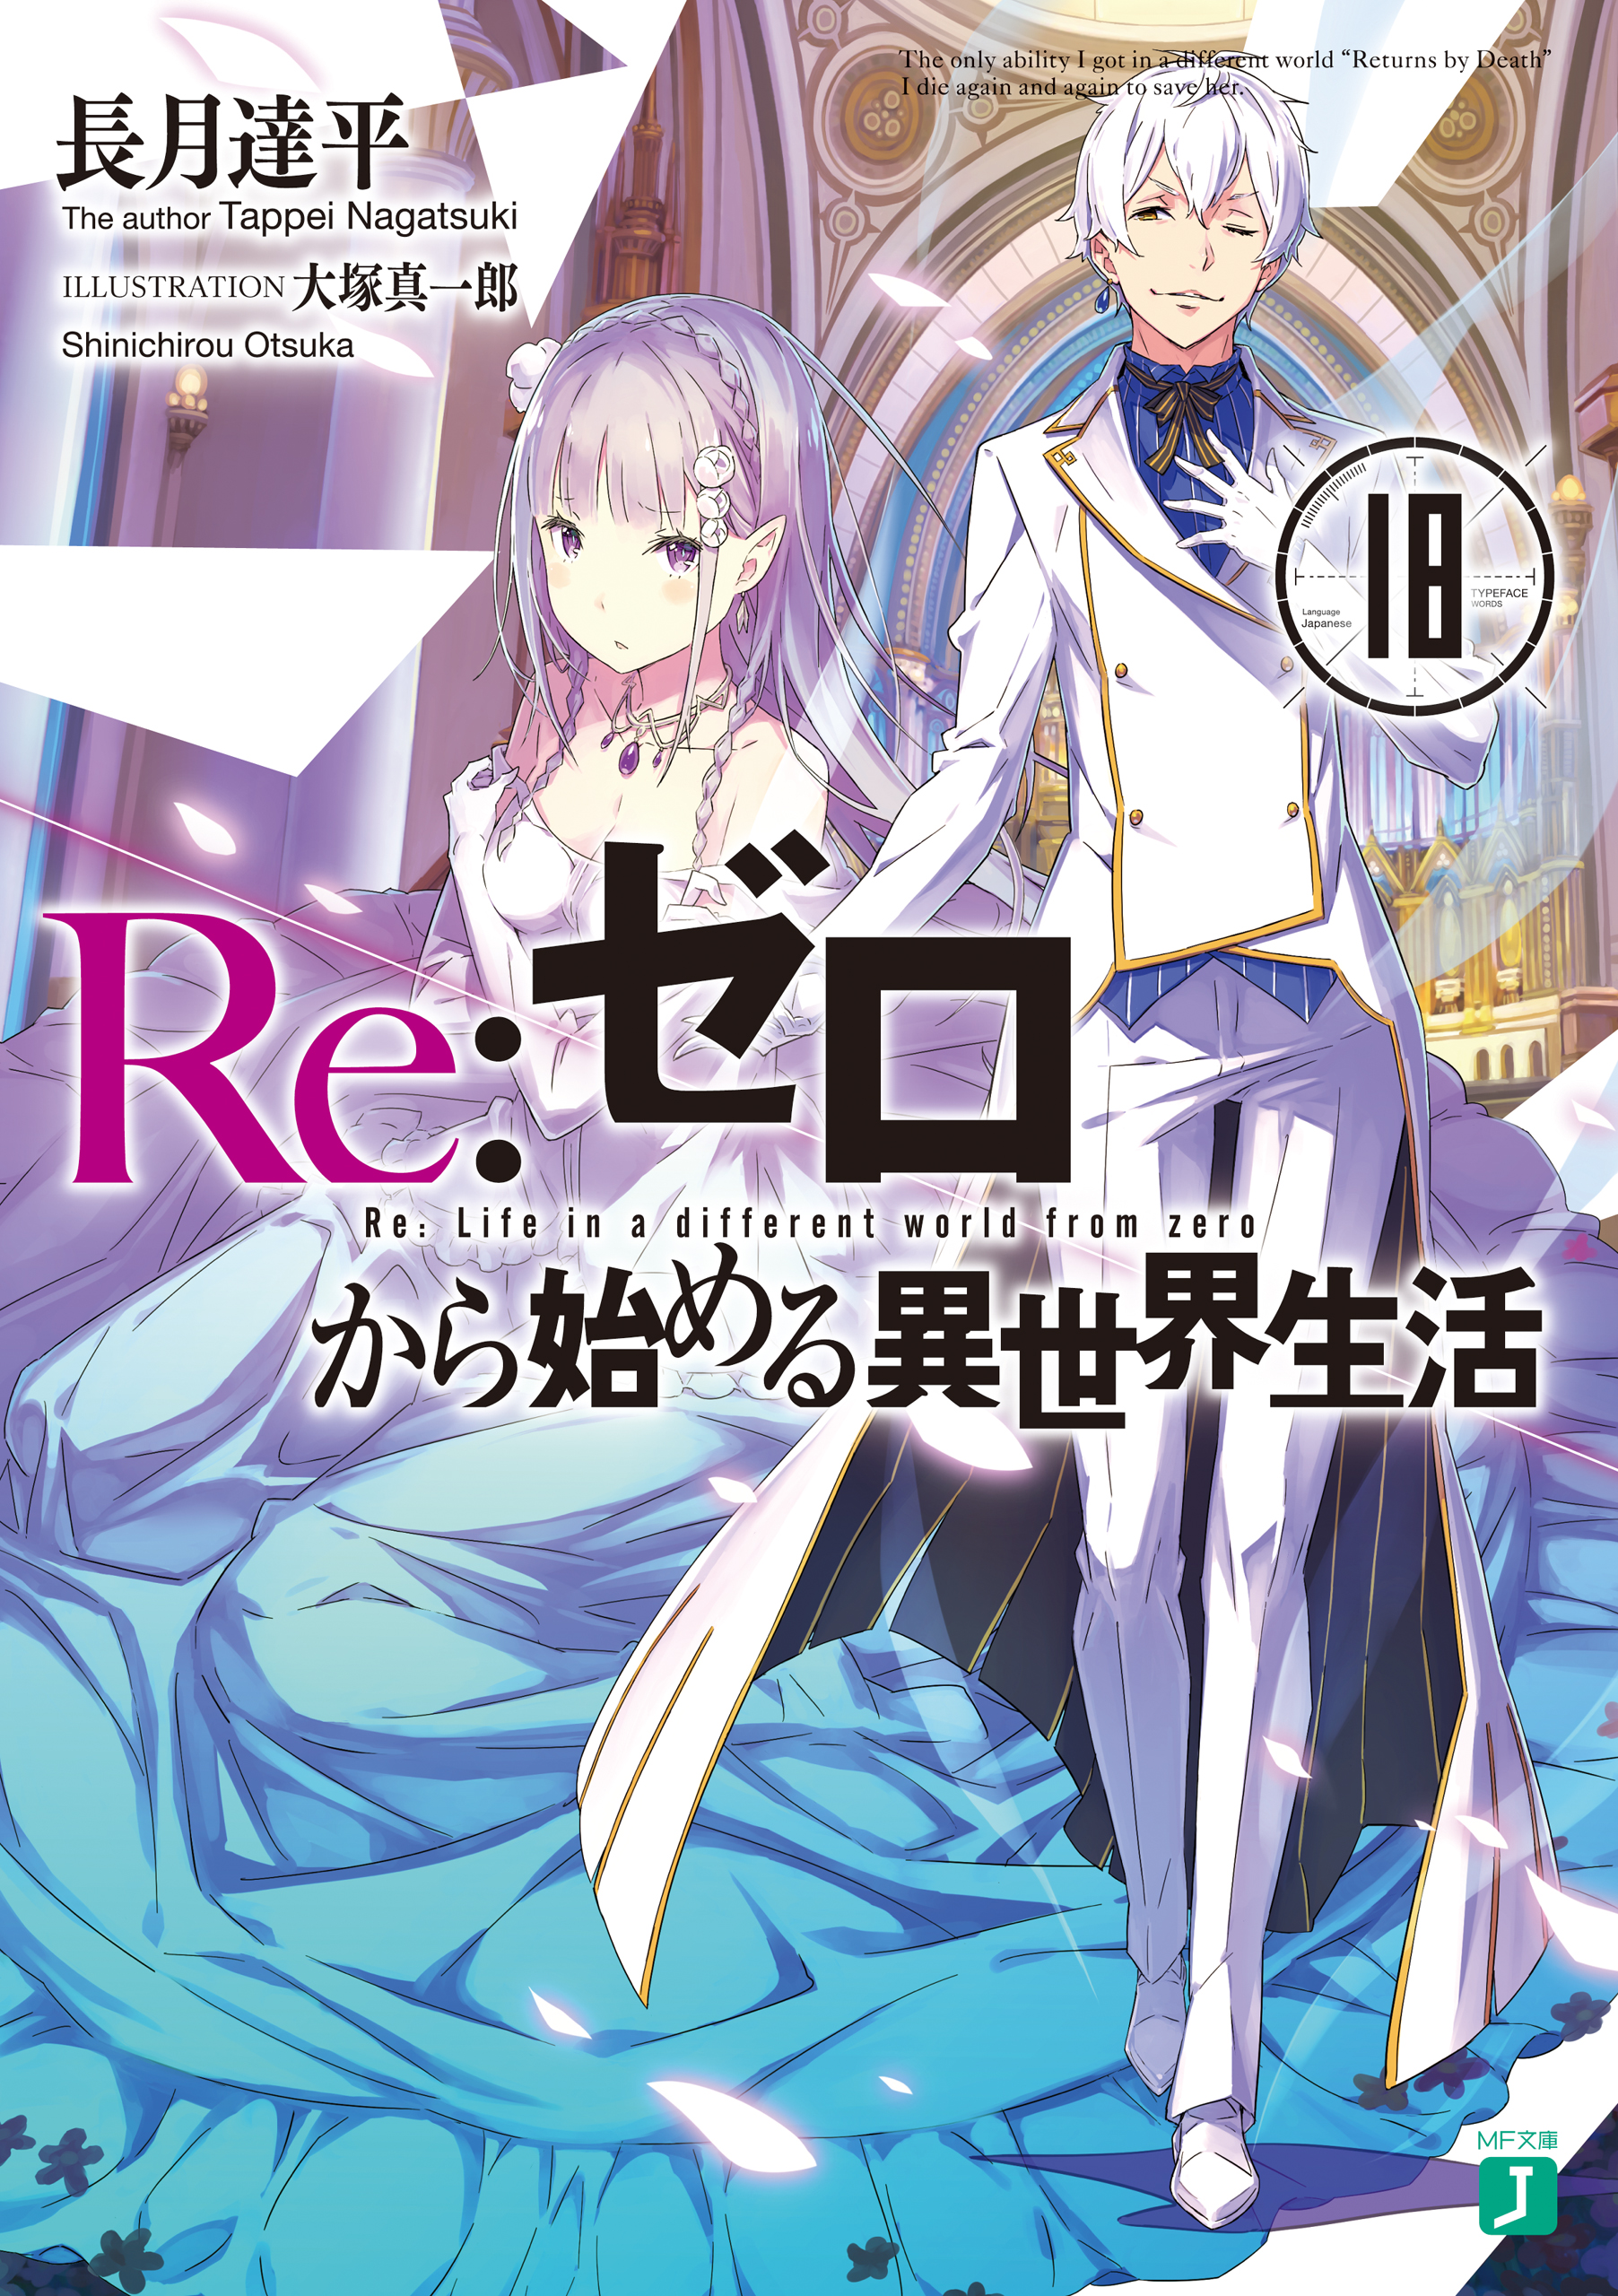 Re:Zero (season 2) - Wikipedia